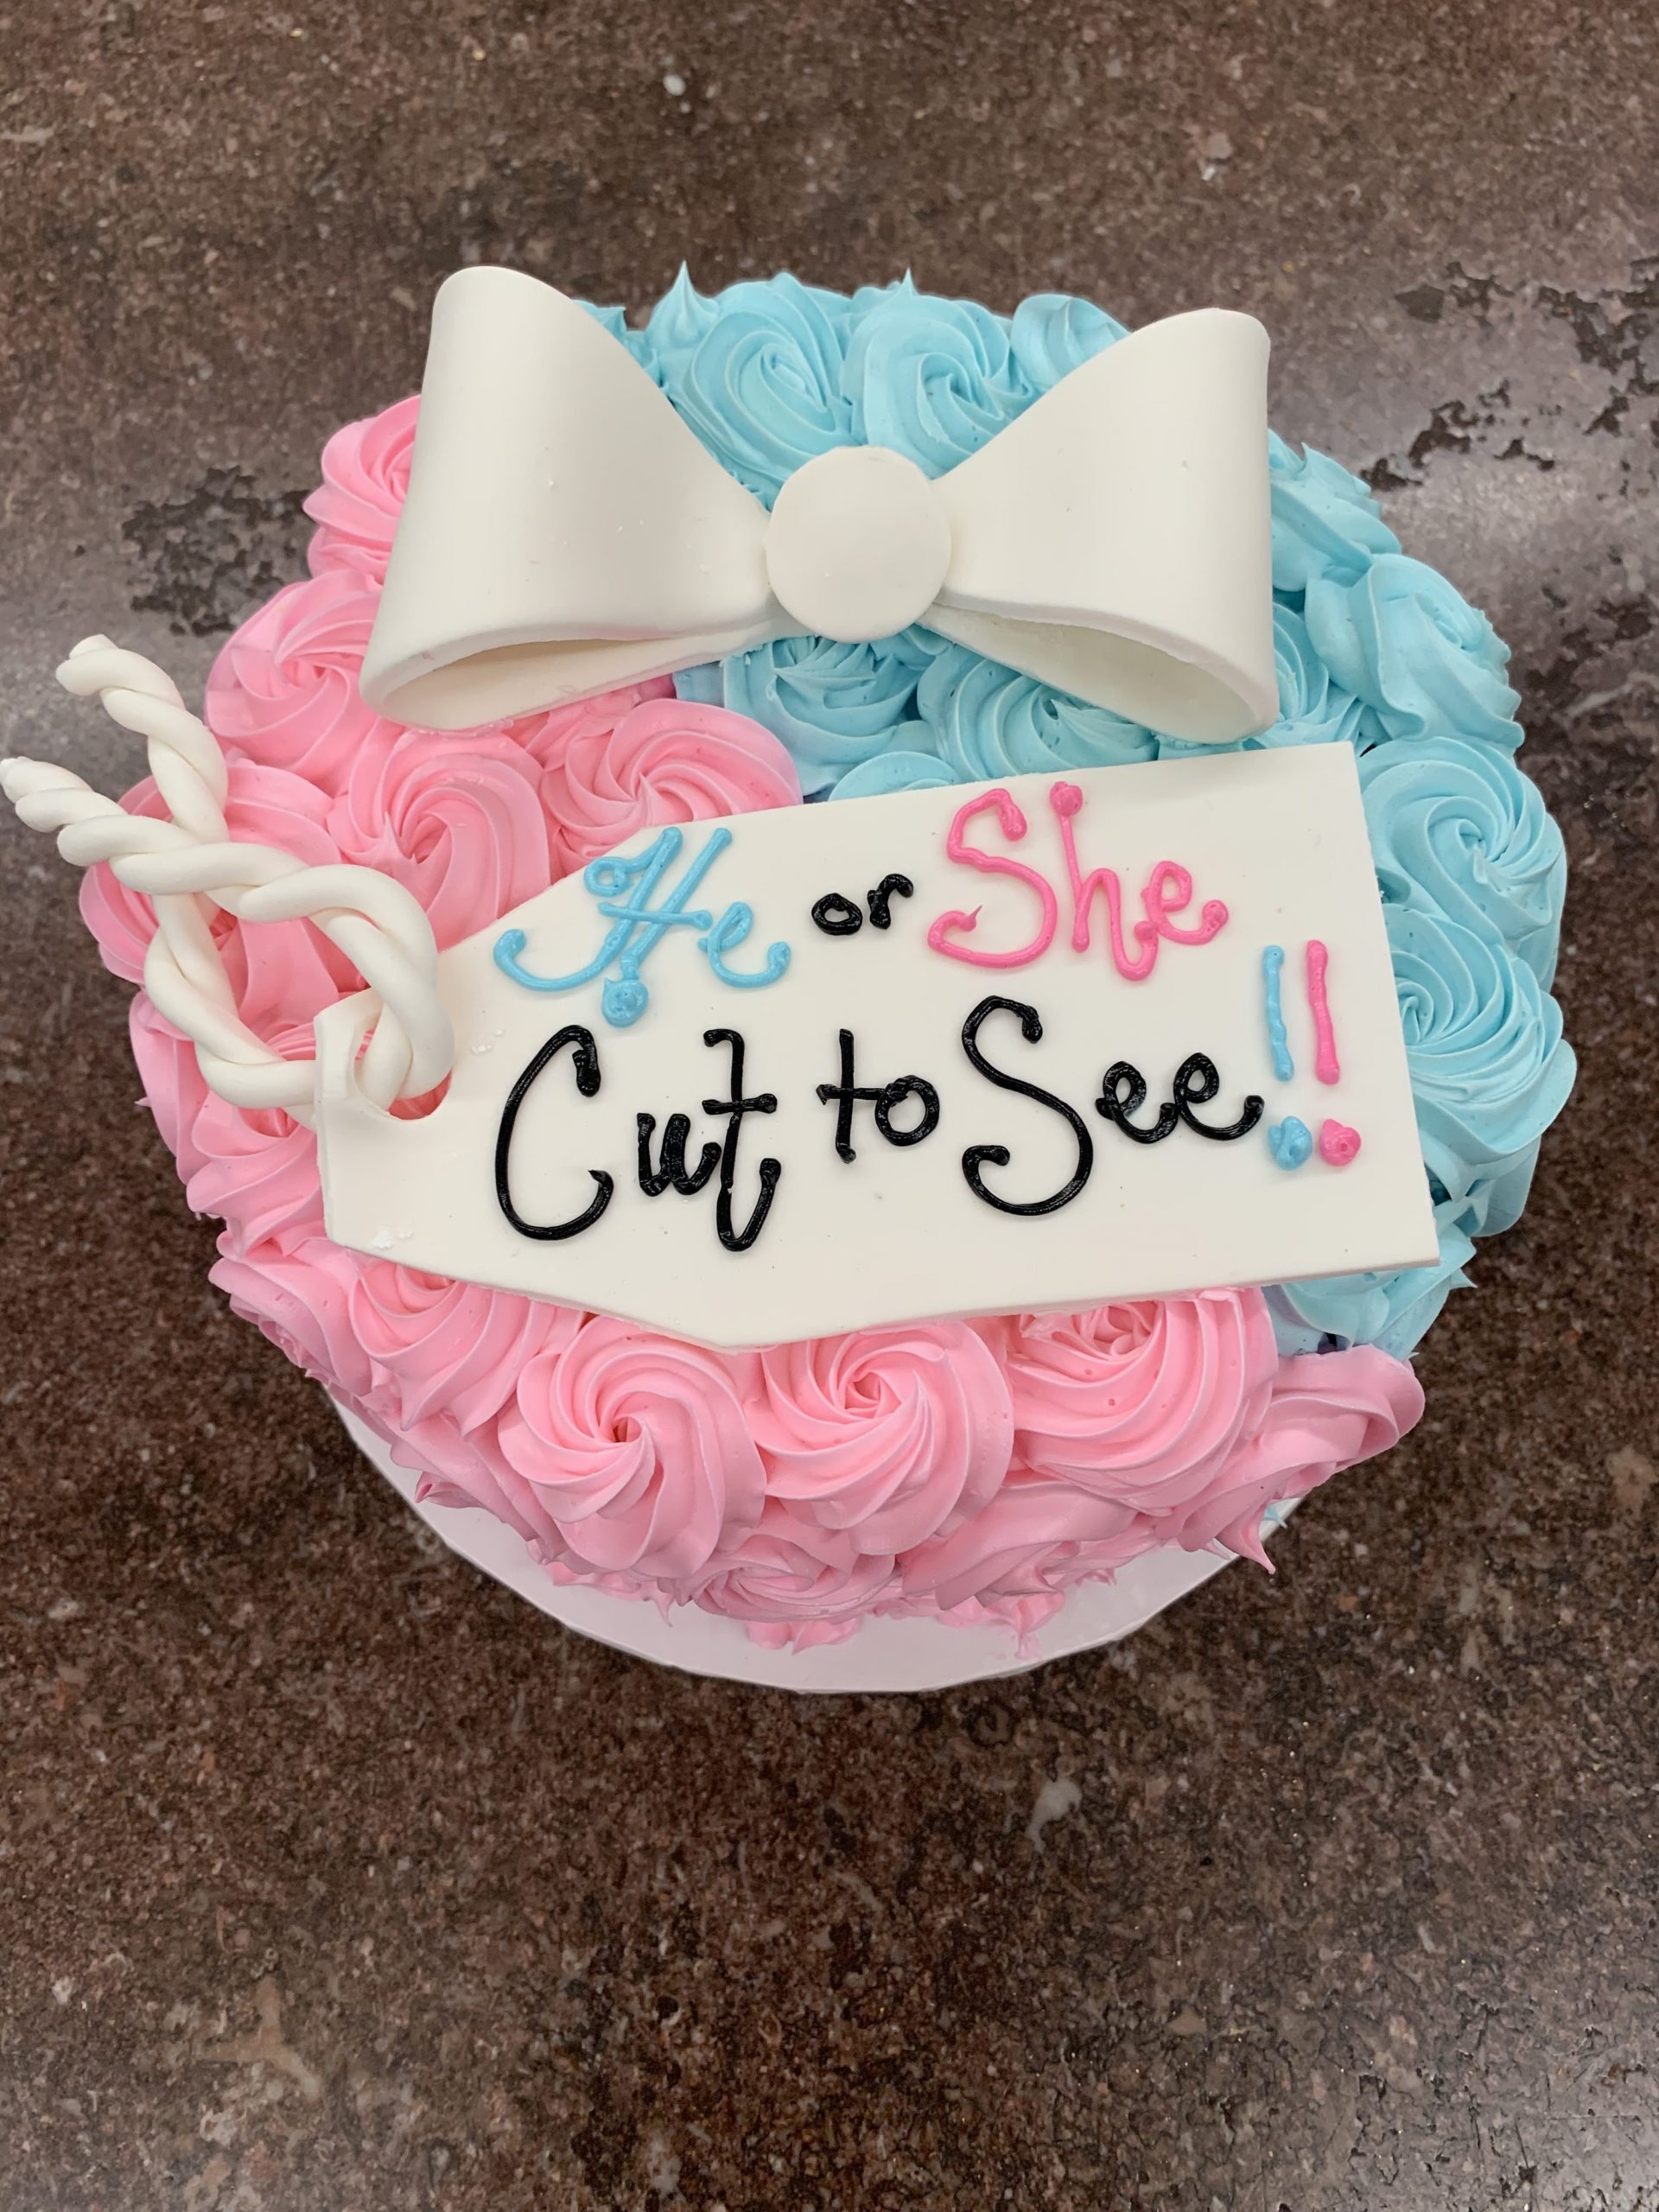 Gender Reveal Cakes